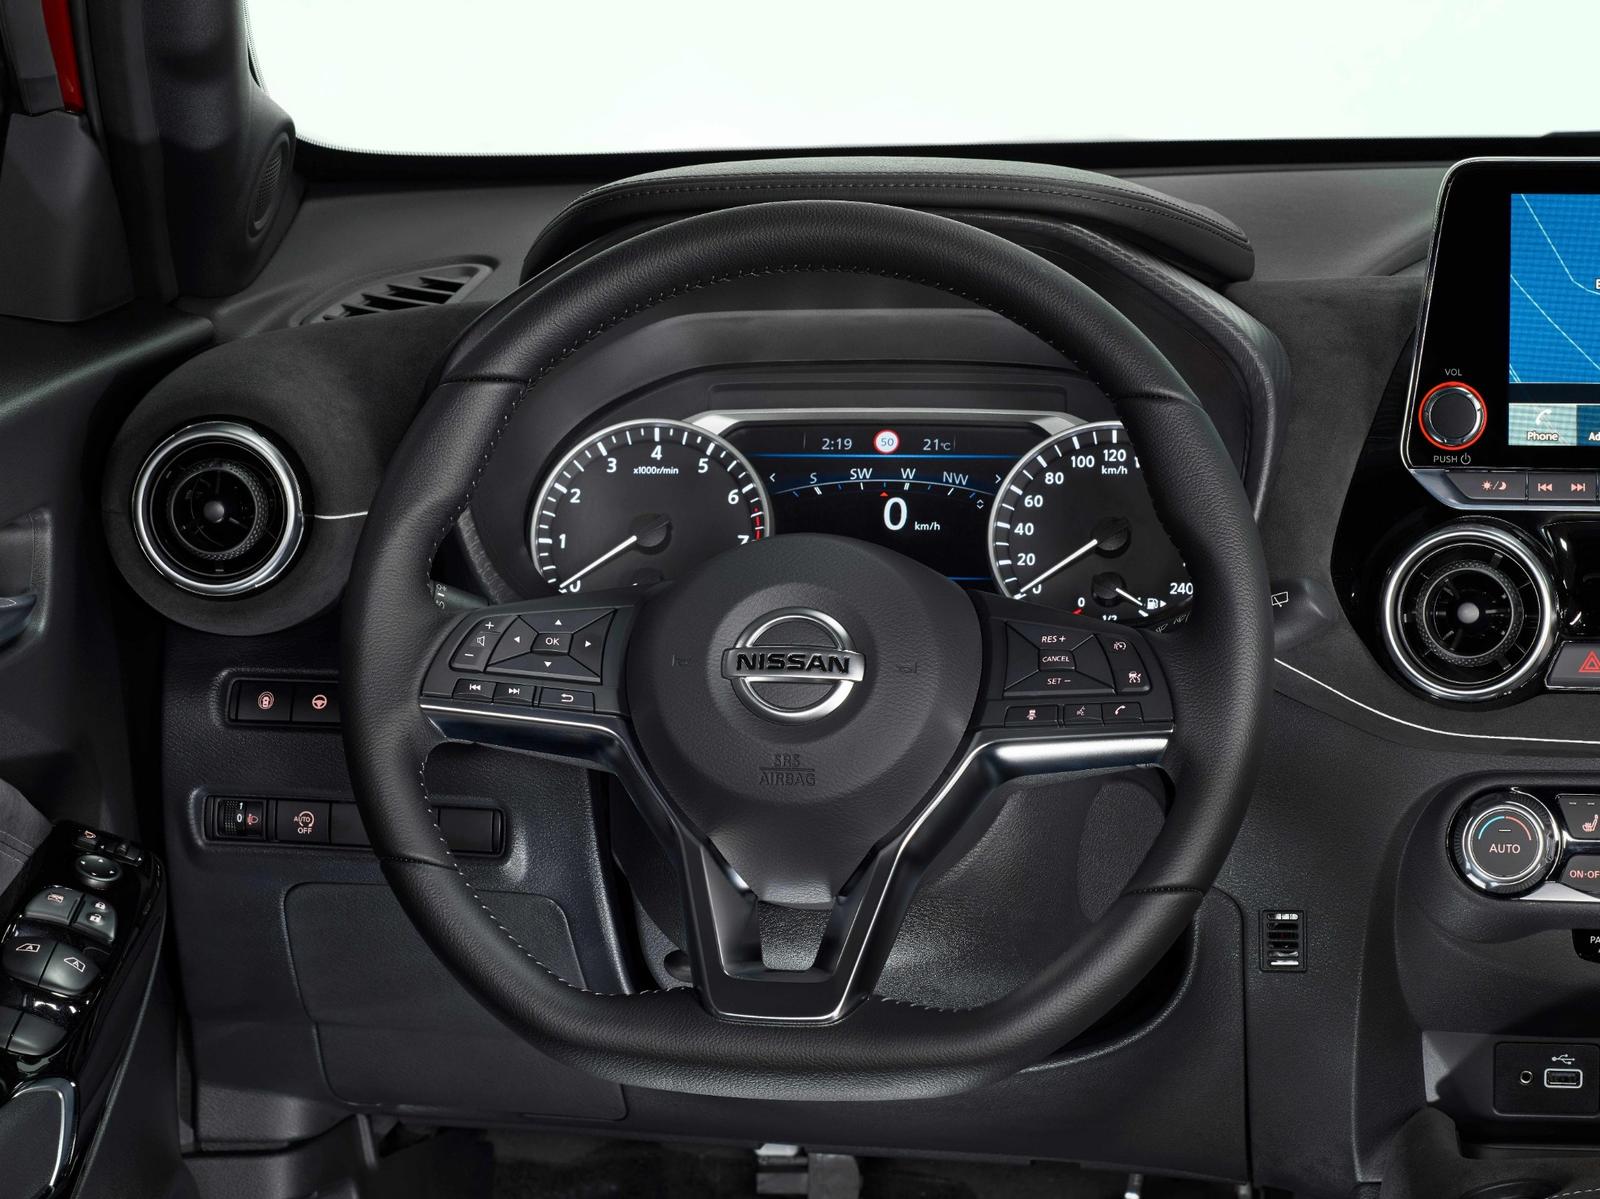 Oct. 7 – 2pm CET – New Nissan JUKE Interior 03-2830×2121-2122×1590